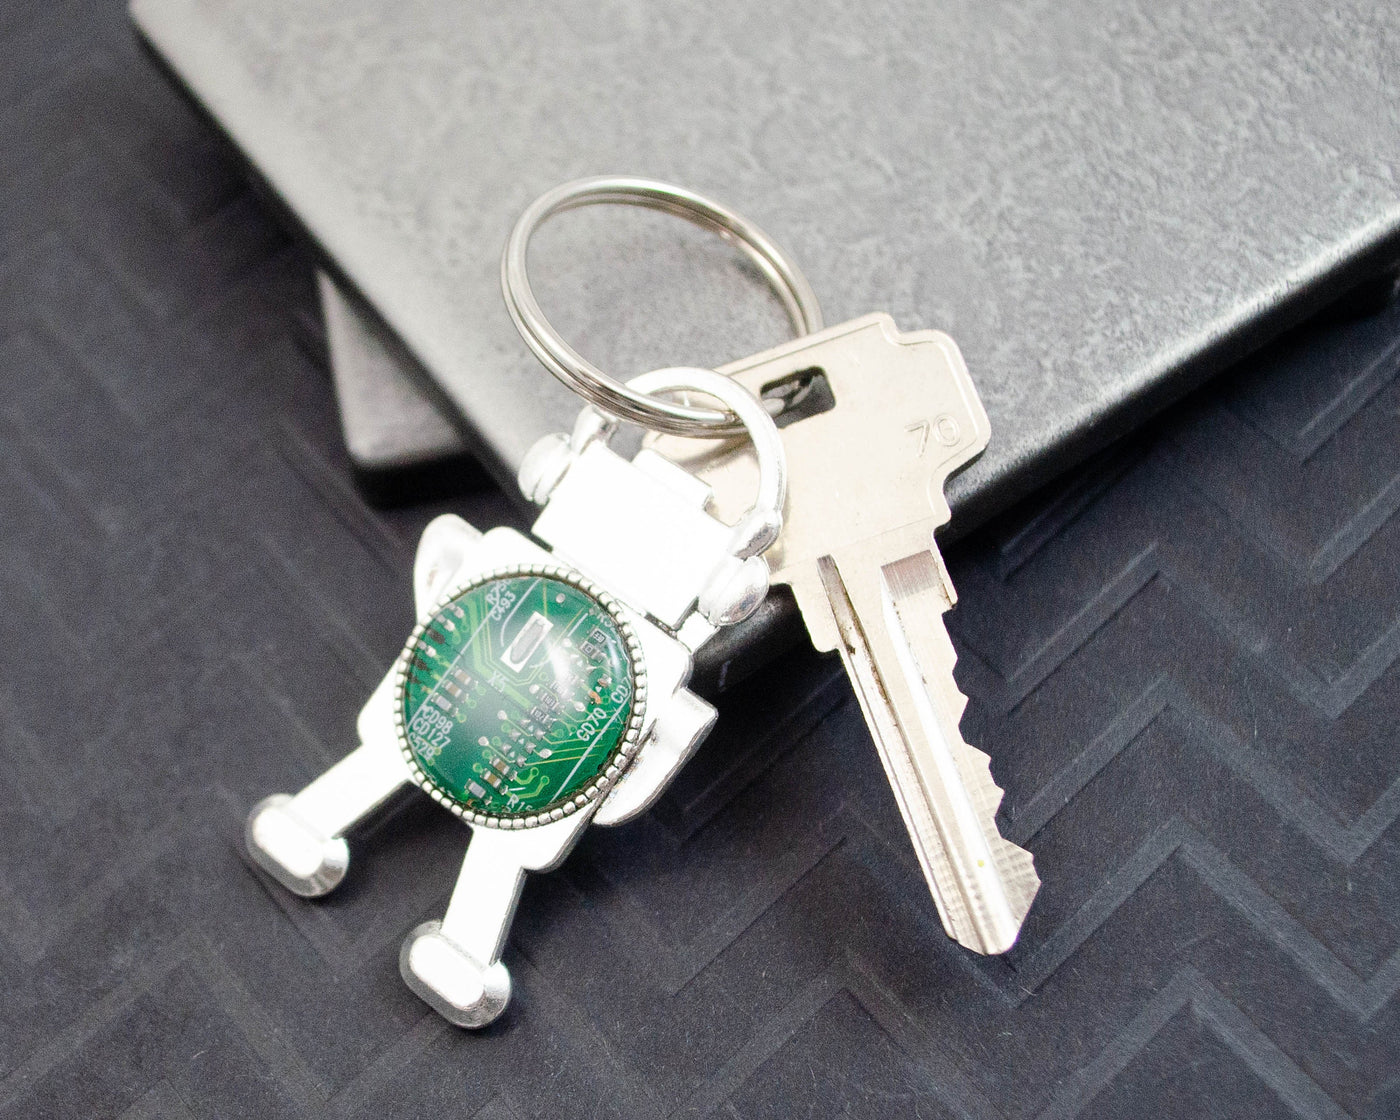 Circuit Board Robot Keychain Green, Robotics Engineer Gift, Electrical Engineer New Job Gift, Geeky Housewarming Gift